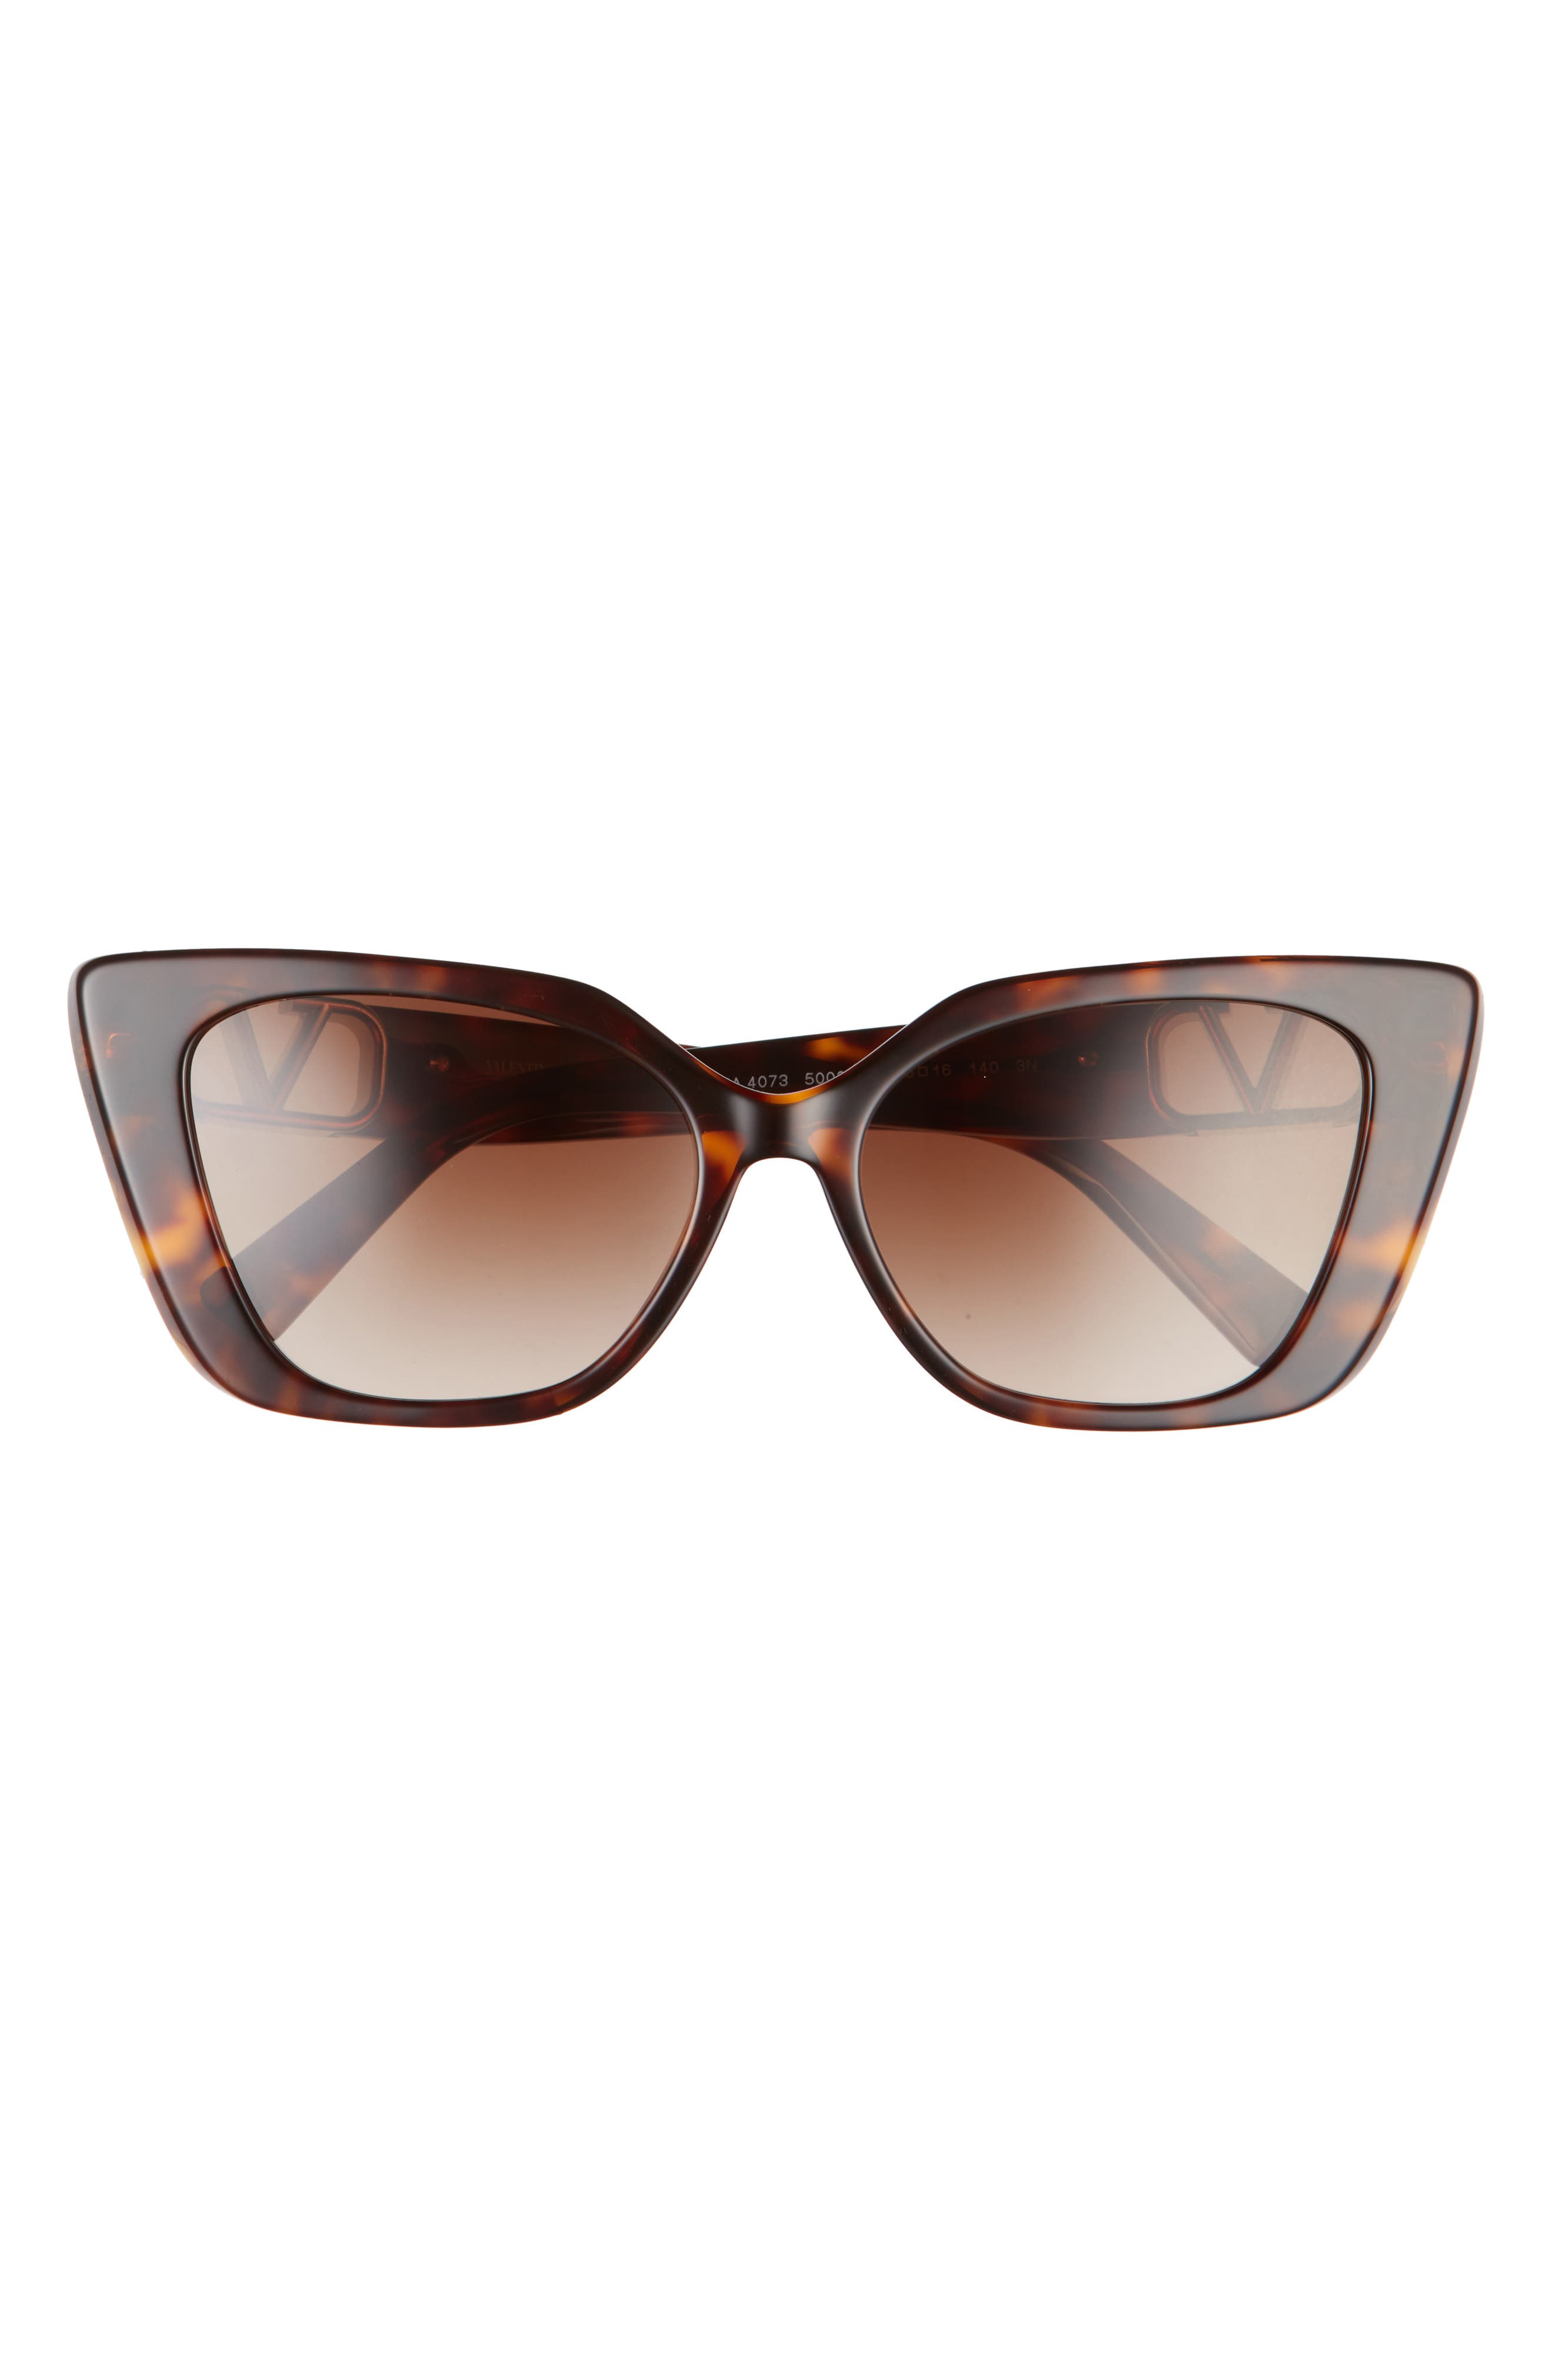 Valentino VLOGO 56mm Gradient Cat Eye Sunglasses in Havana/Brown Gradient at Nordstrom